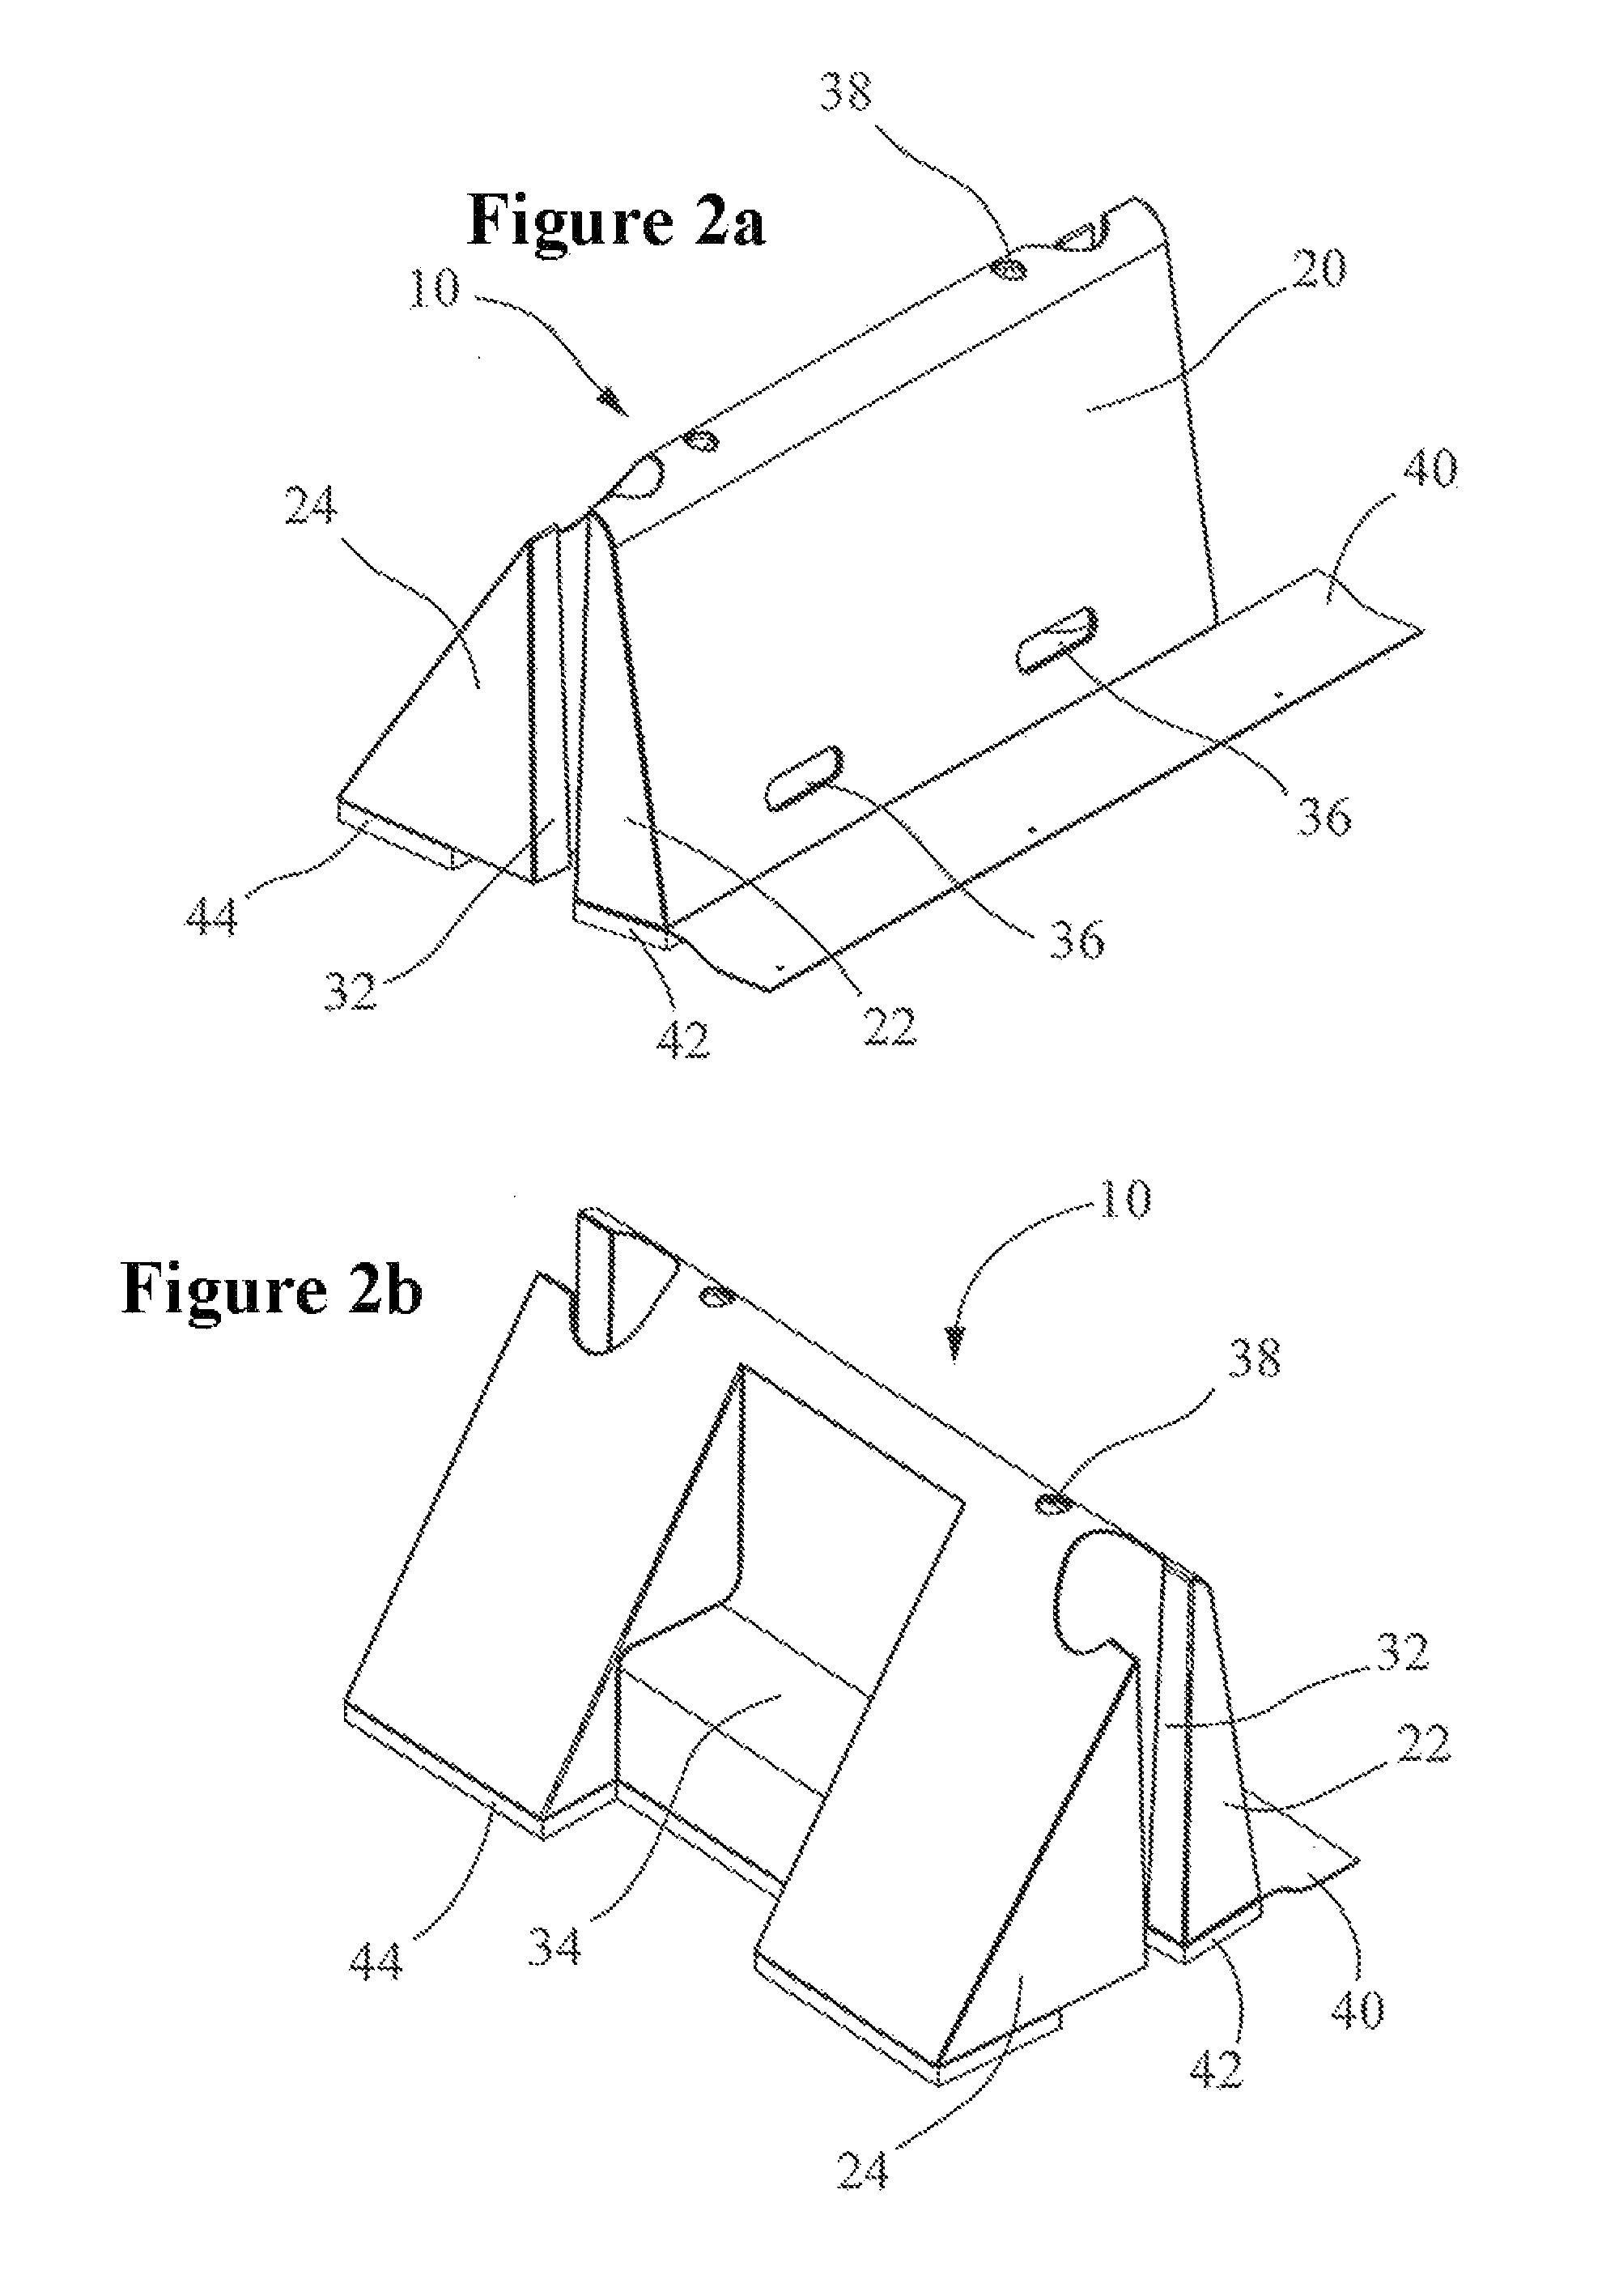 Self-filling modular barrier